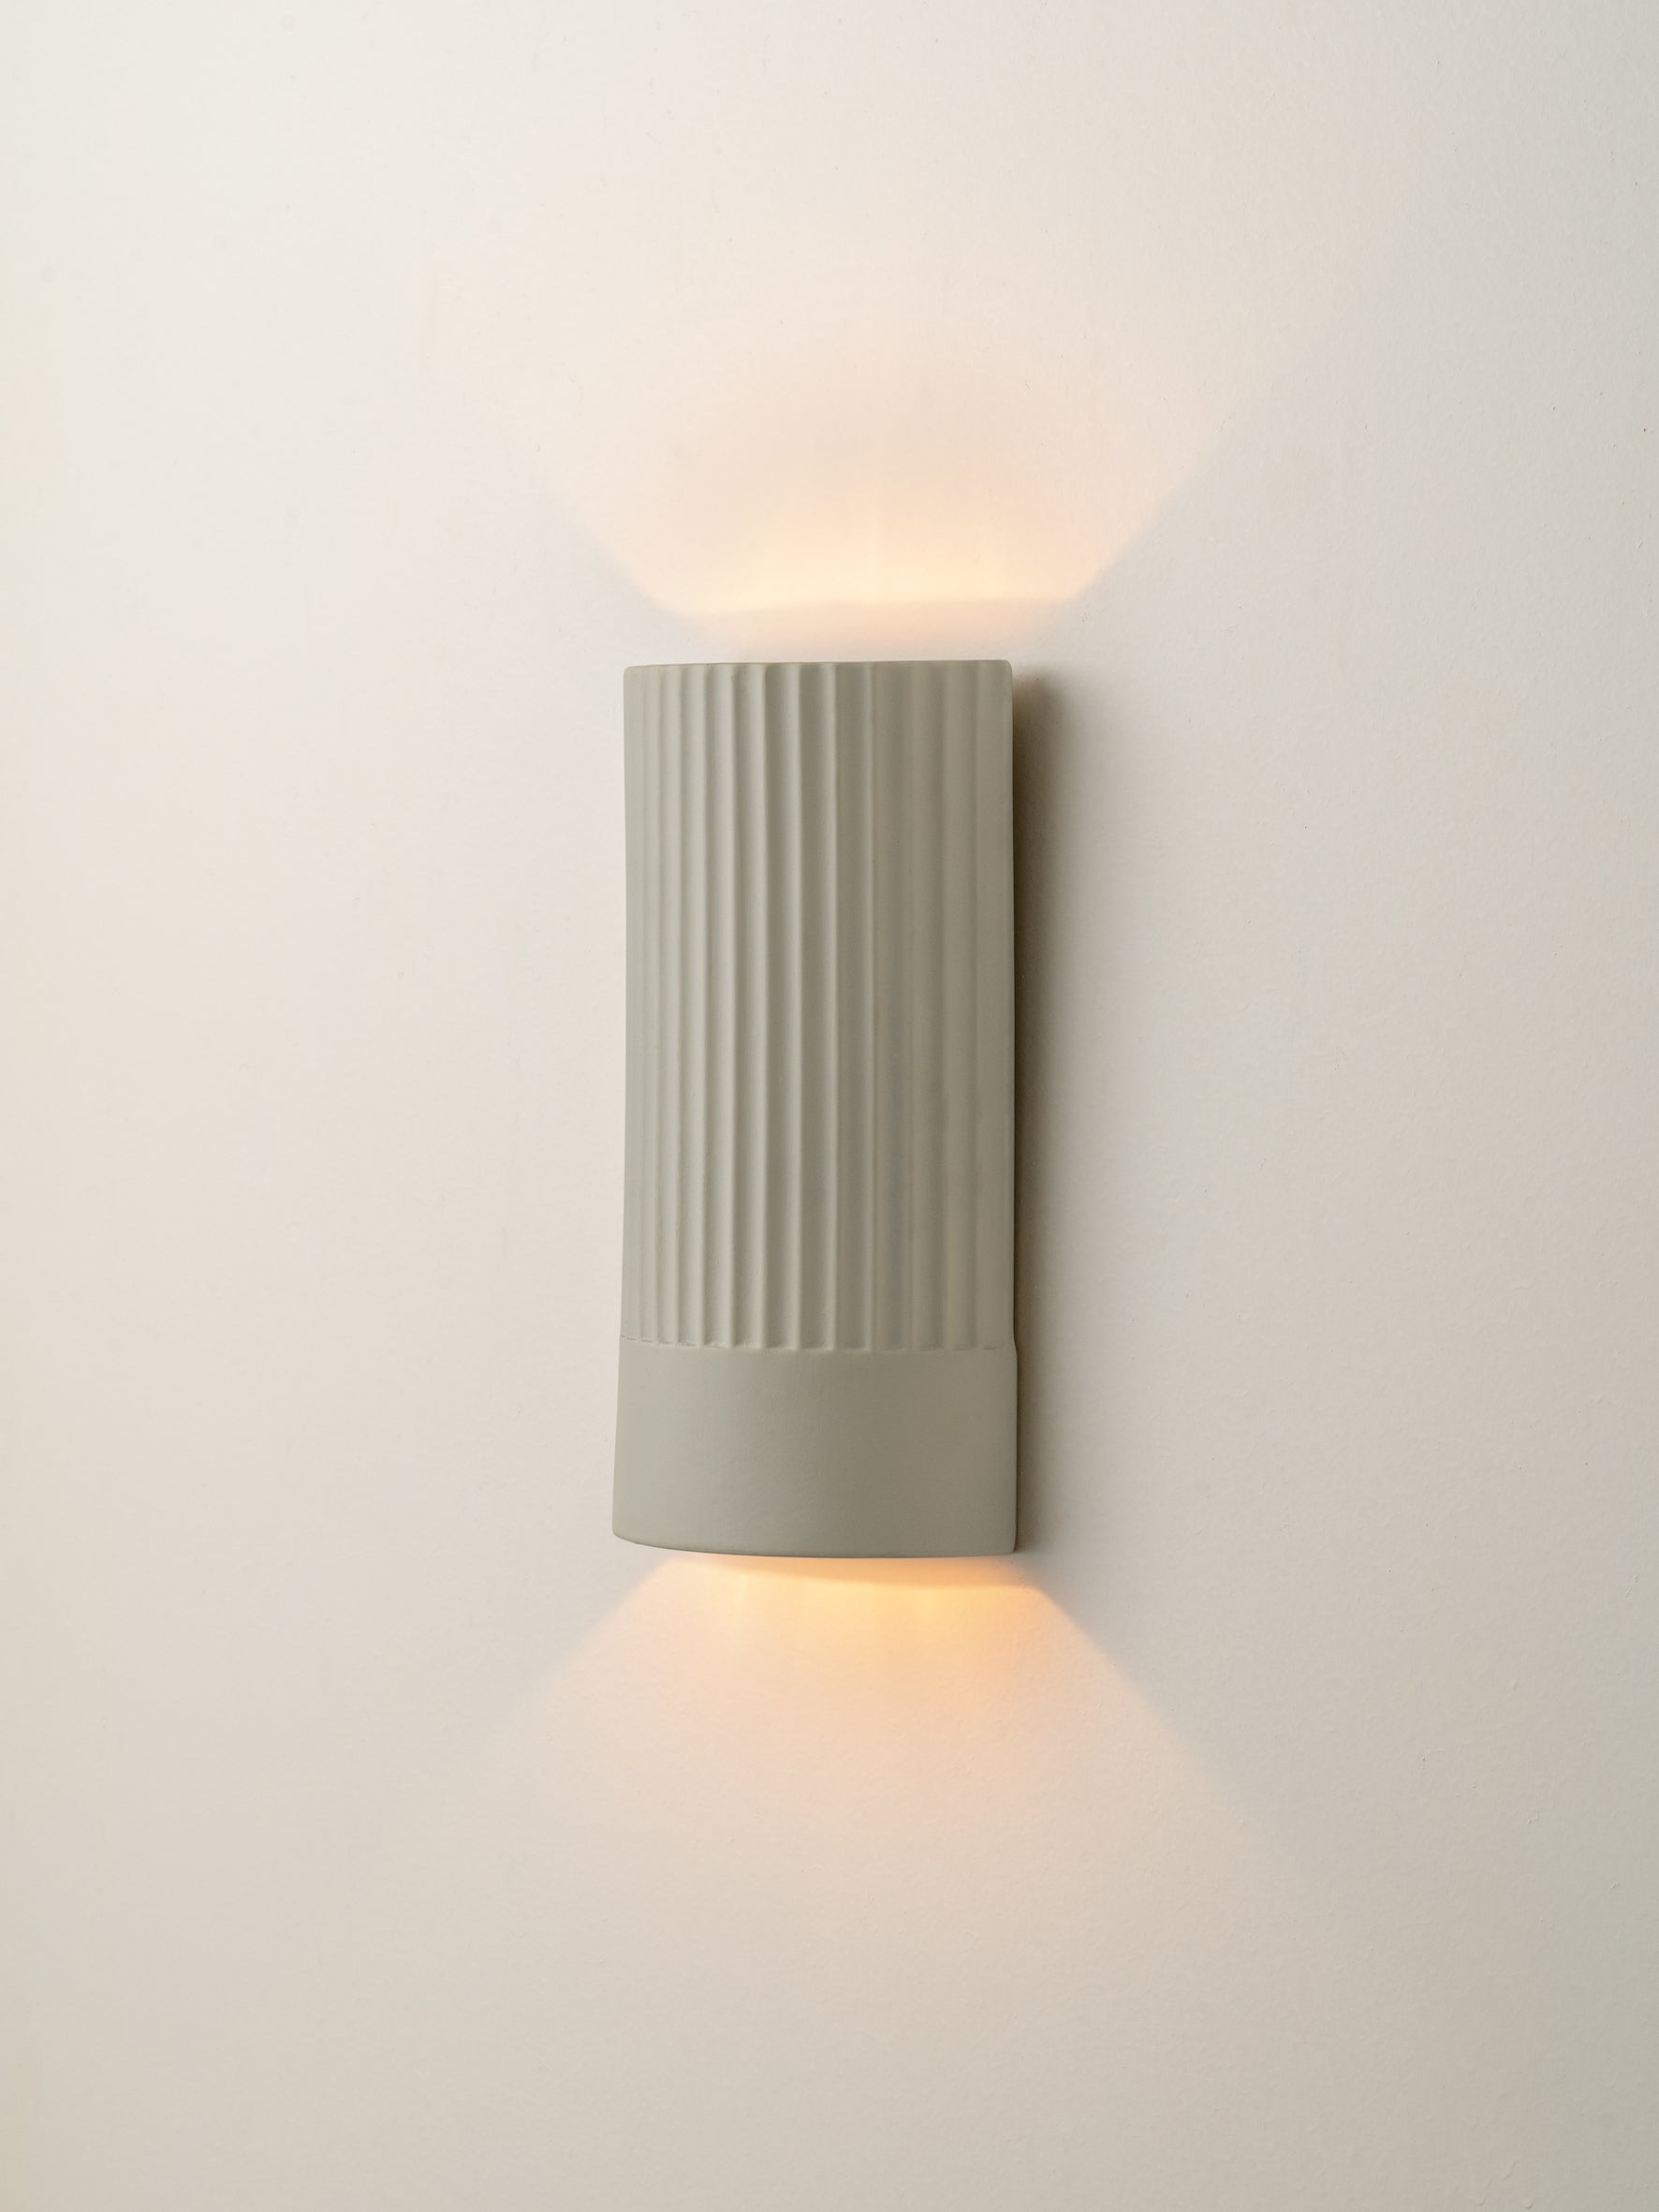 Enza - warm white  ribbed concrete wall light | Wall Light | Lights & Lamps Inc | Modern Affordable Designer Lighting | USA